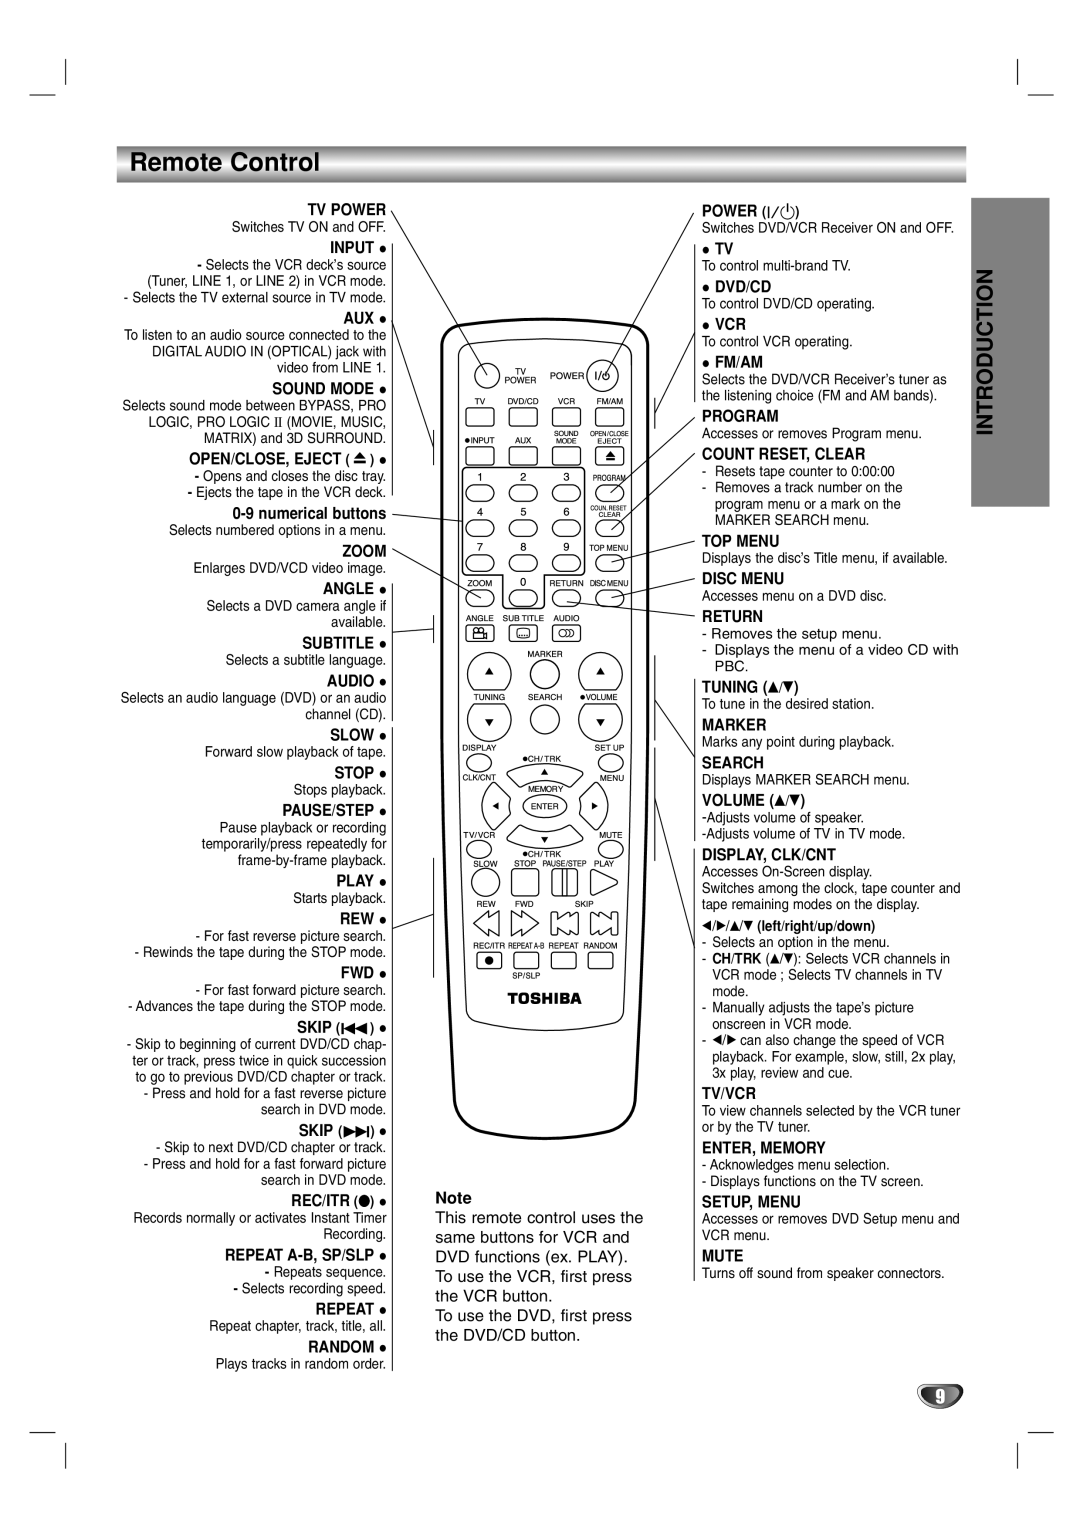 Toshiba SD-V57HTSU owner manual Remote Control, Introduction 